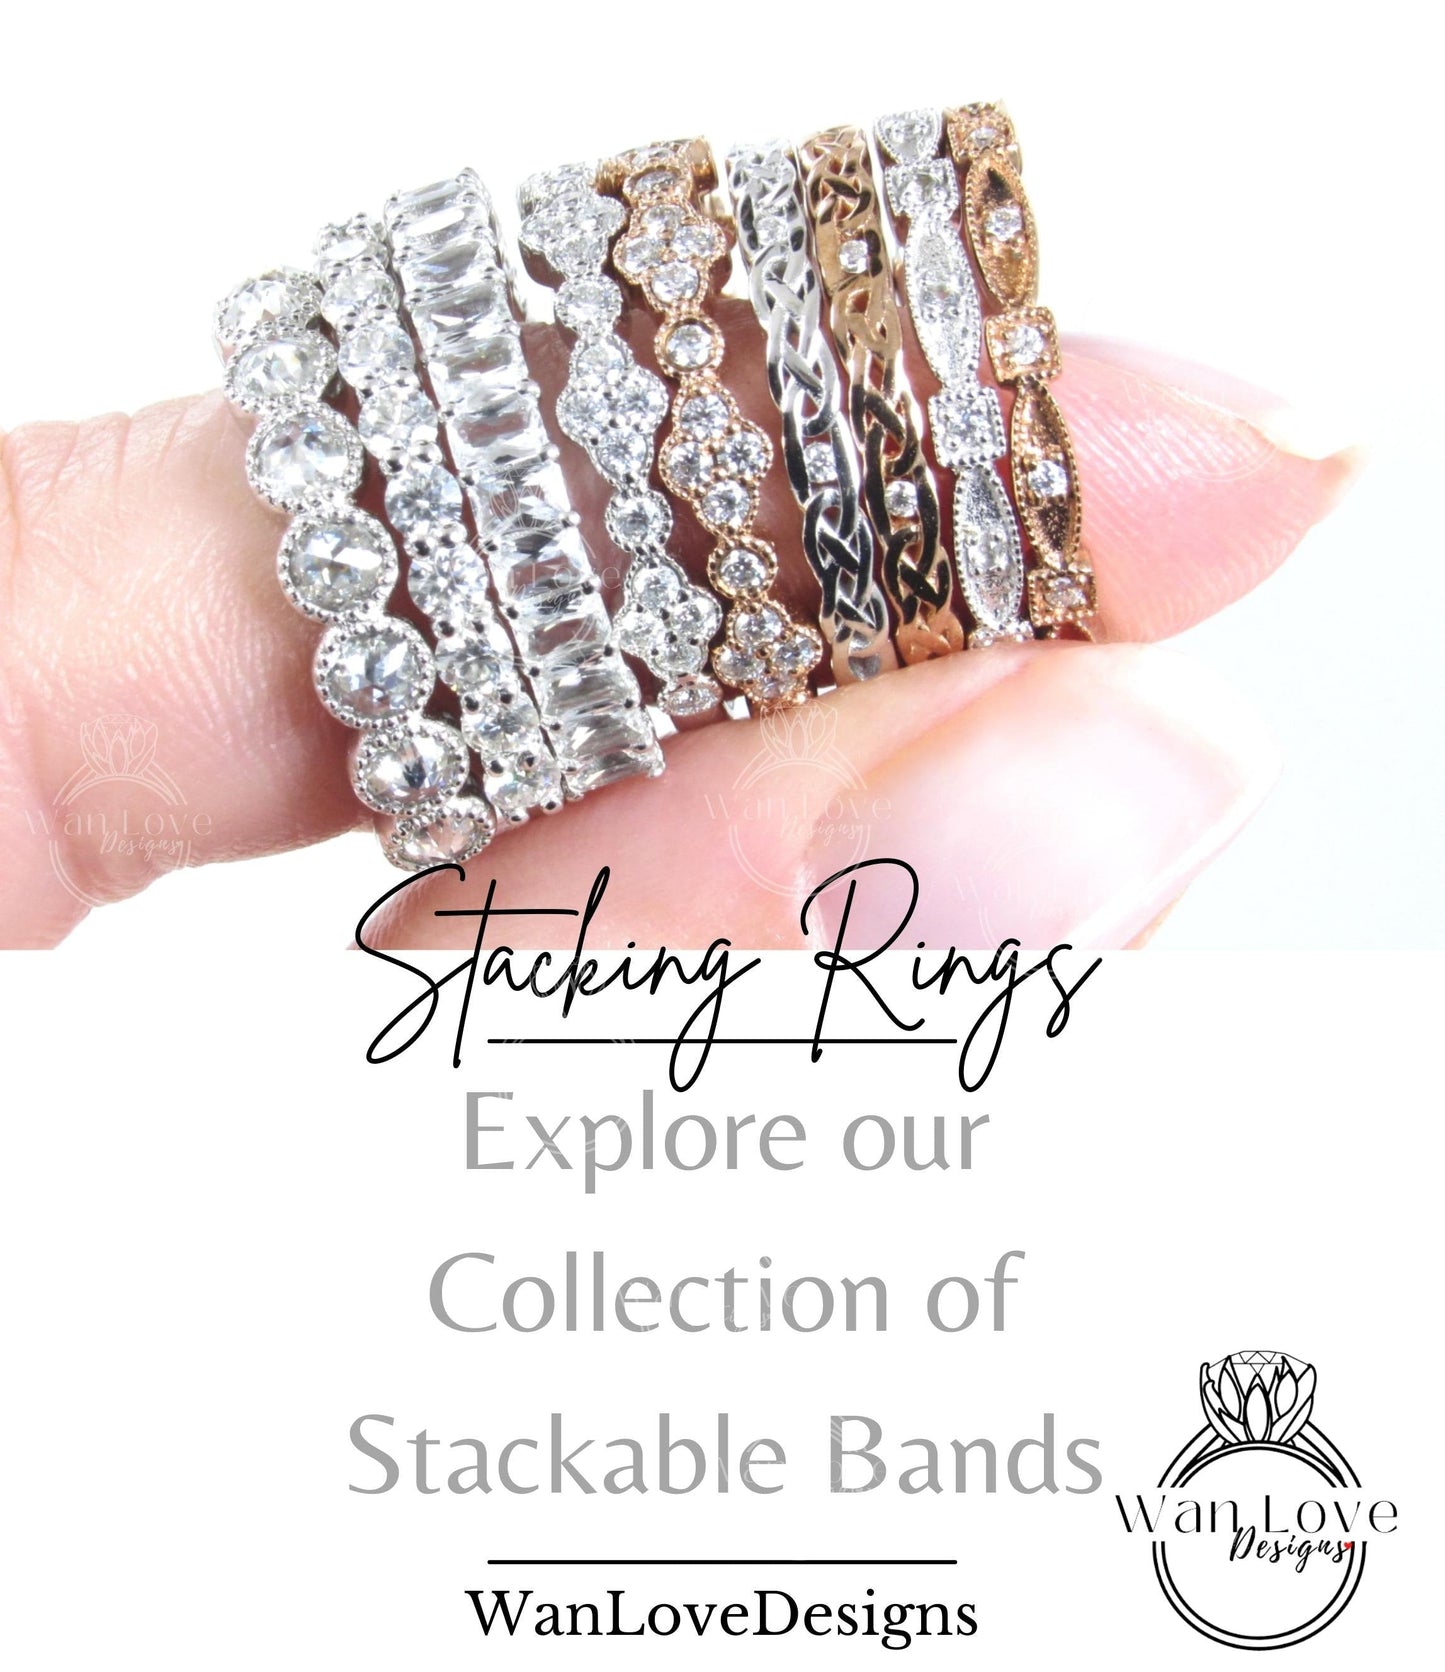 Blue Sapphire Diamond Milgrain Wedding Band - Vintage channel prong set Wedding ring - Bead set Antique Band - Birthstone Choice Bridal Ring Wan Love Designs